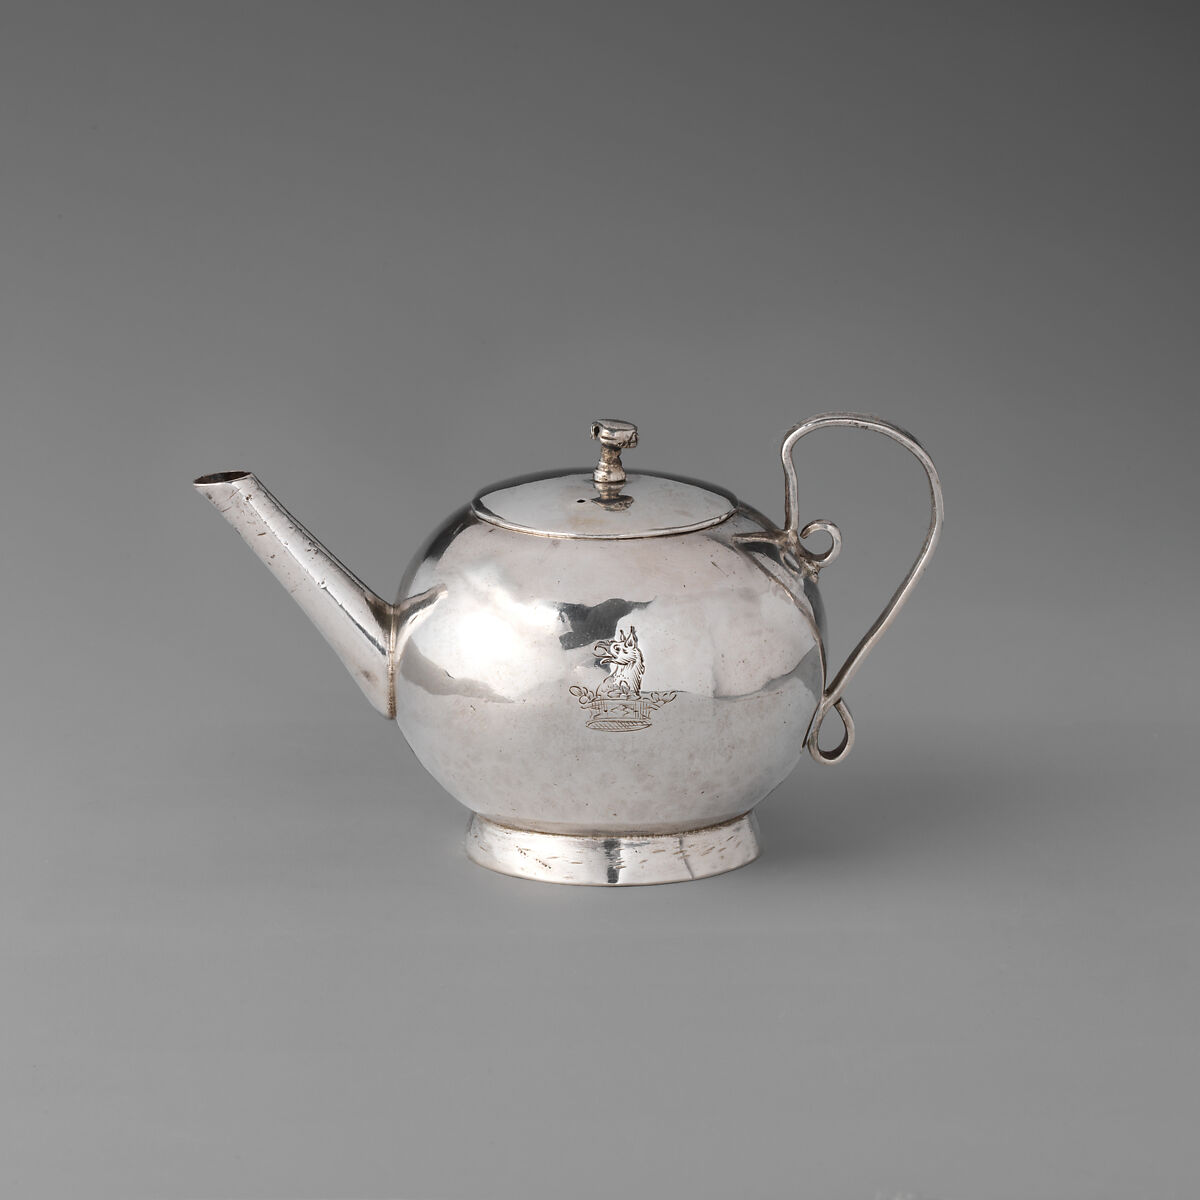 Miniature teapot, Silver, possibly Dutch 